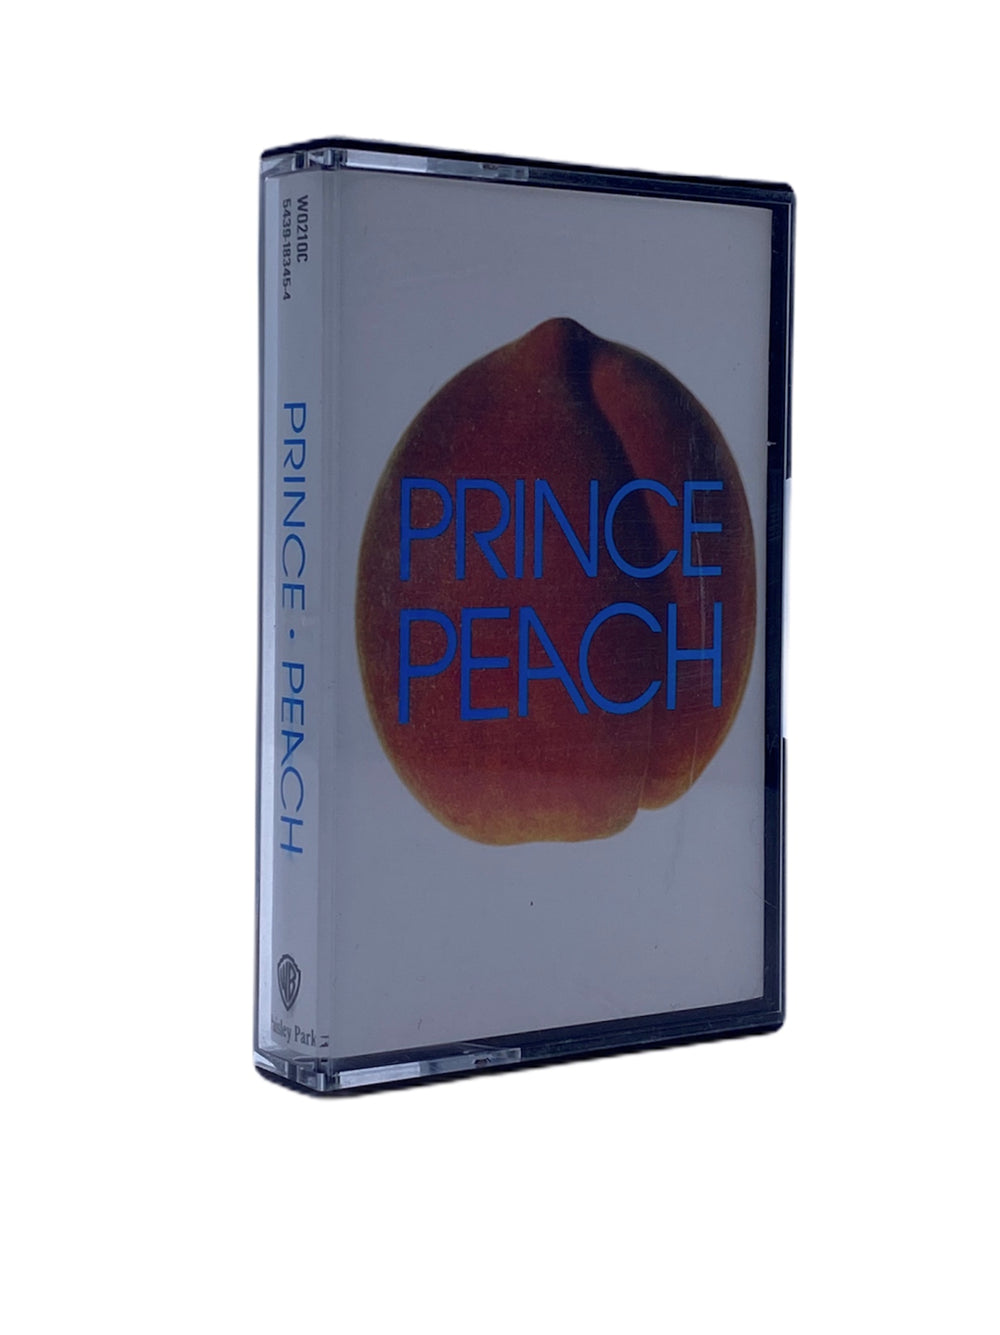 Prince Peach 1992 Original Cassette Tape Single Cassingle SMS